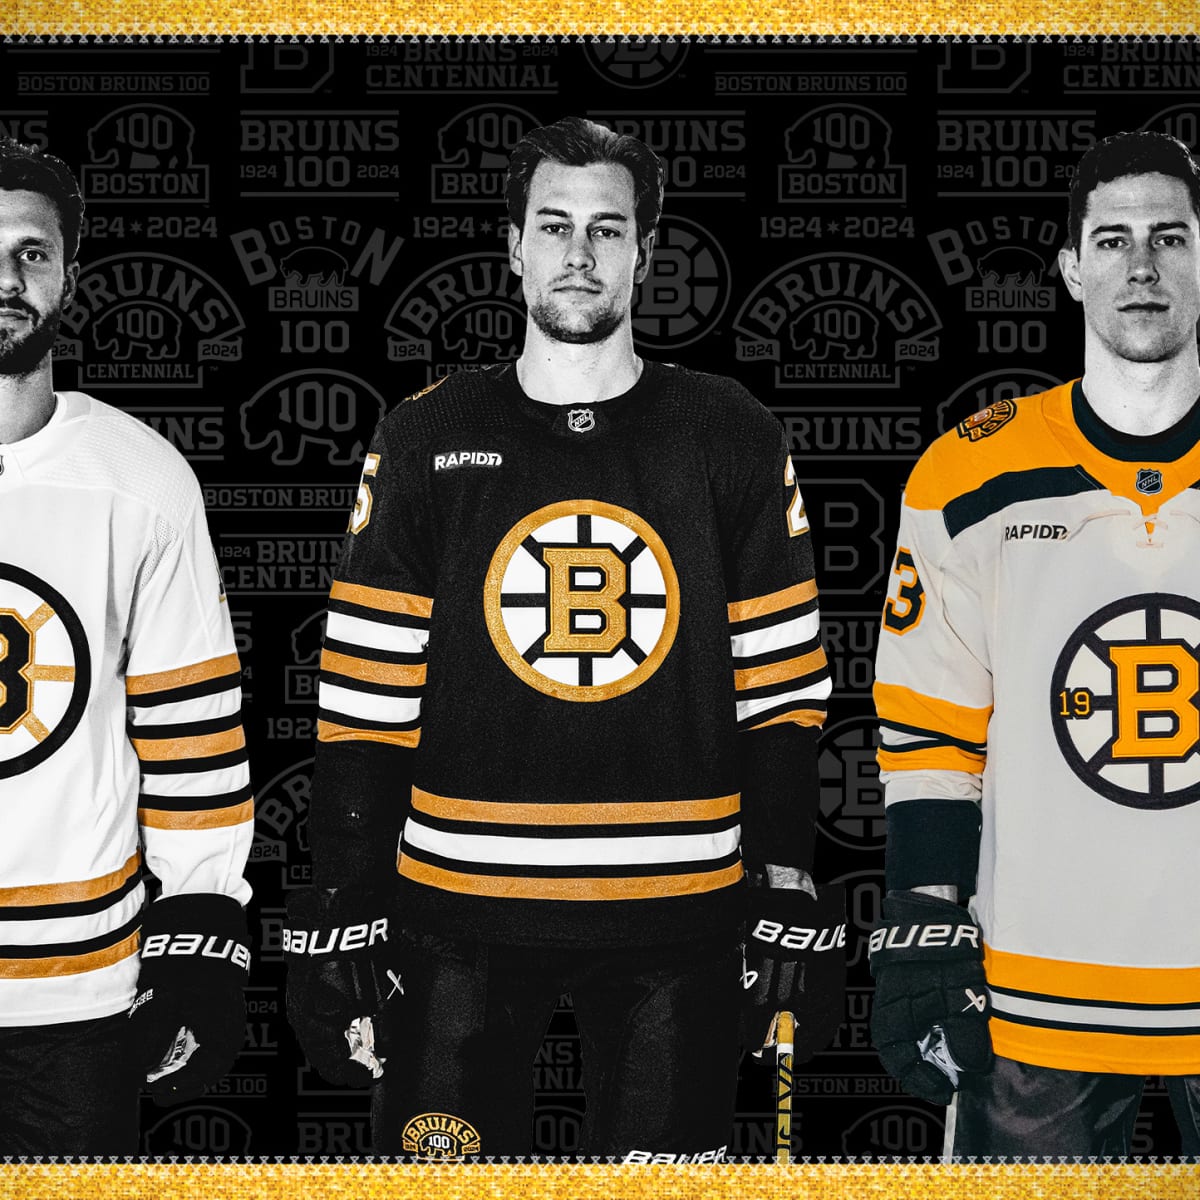 Boston Bruins Wearing Rapid7 Advertisement on Jerseys Starting in 2022-23 –  SportsLogos.Net News